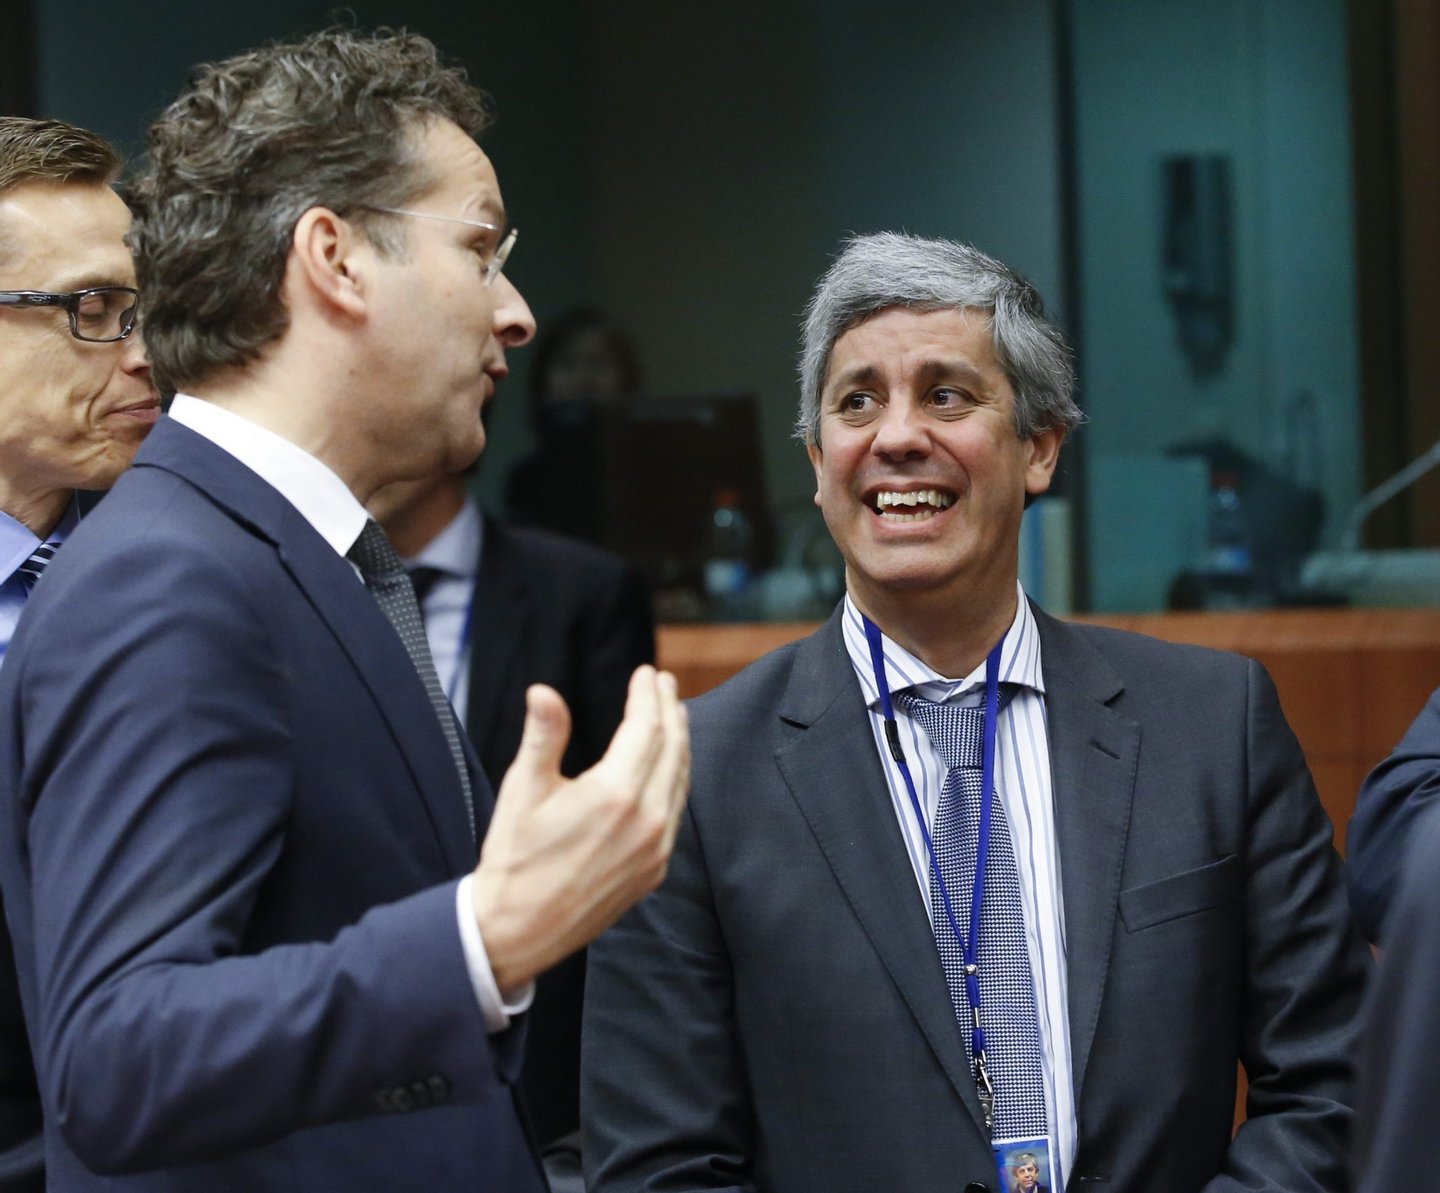 Eurogroup Finance ministers meeting